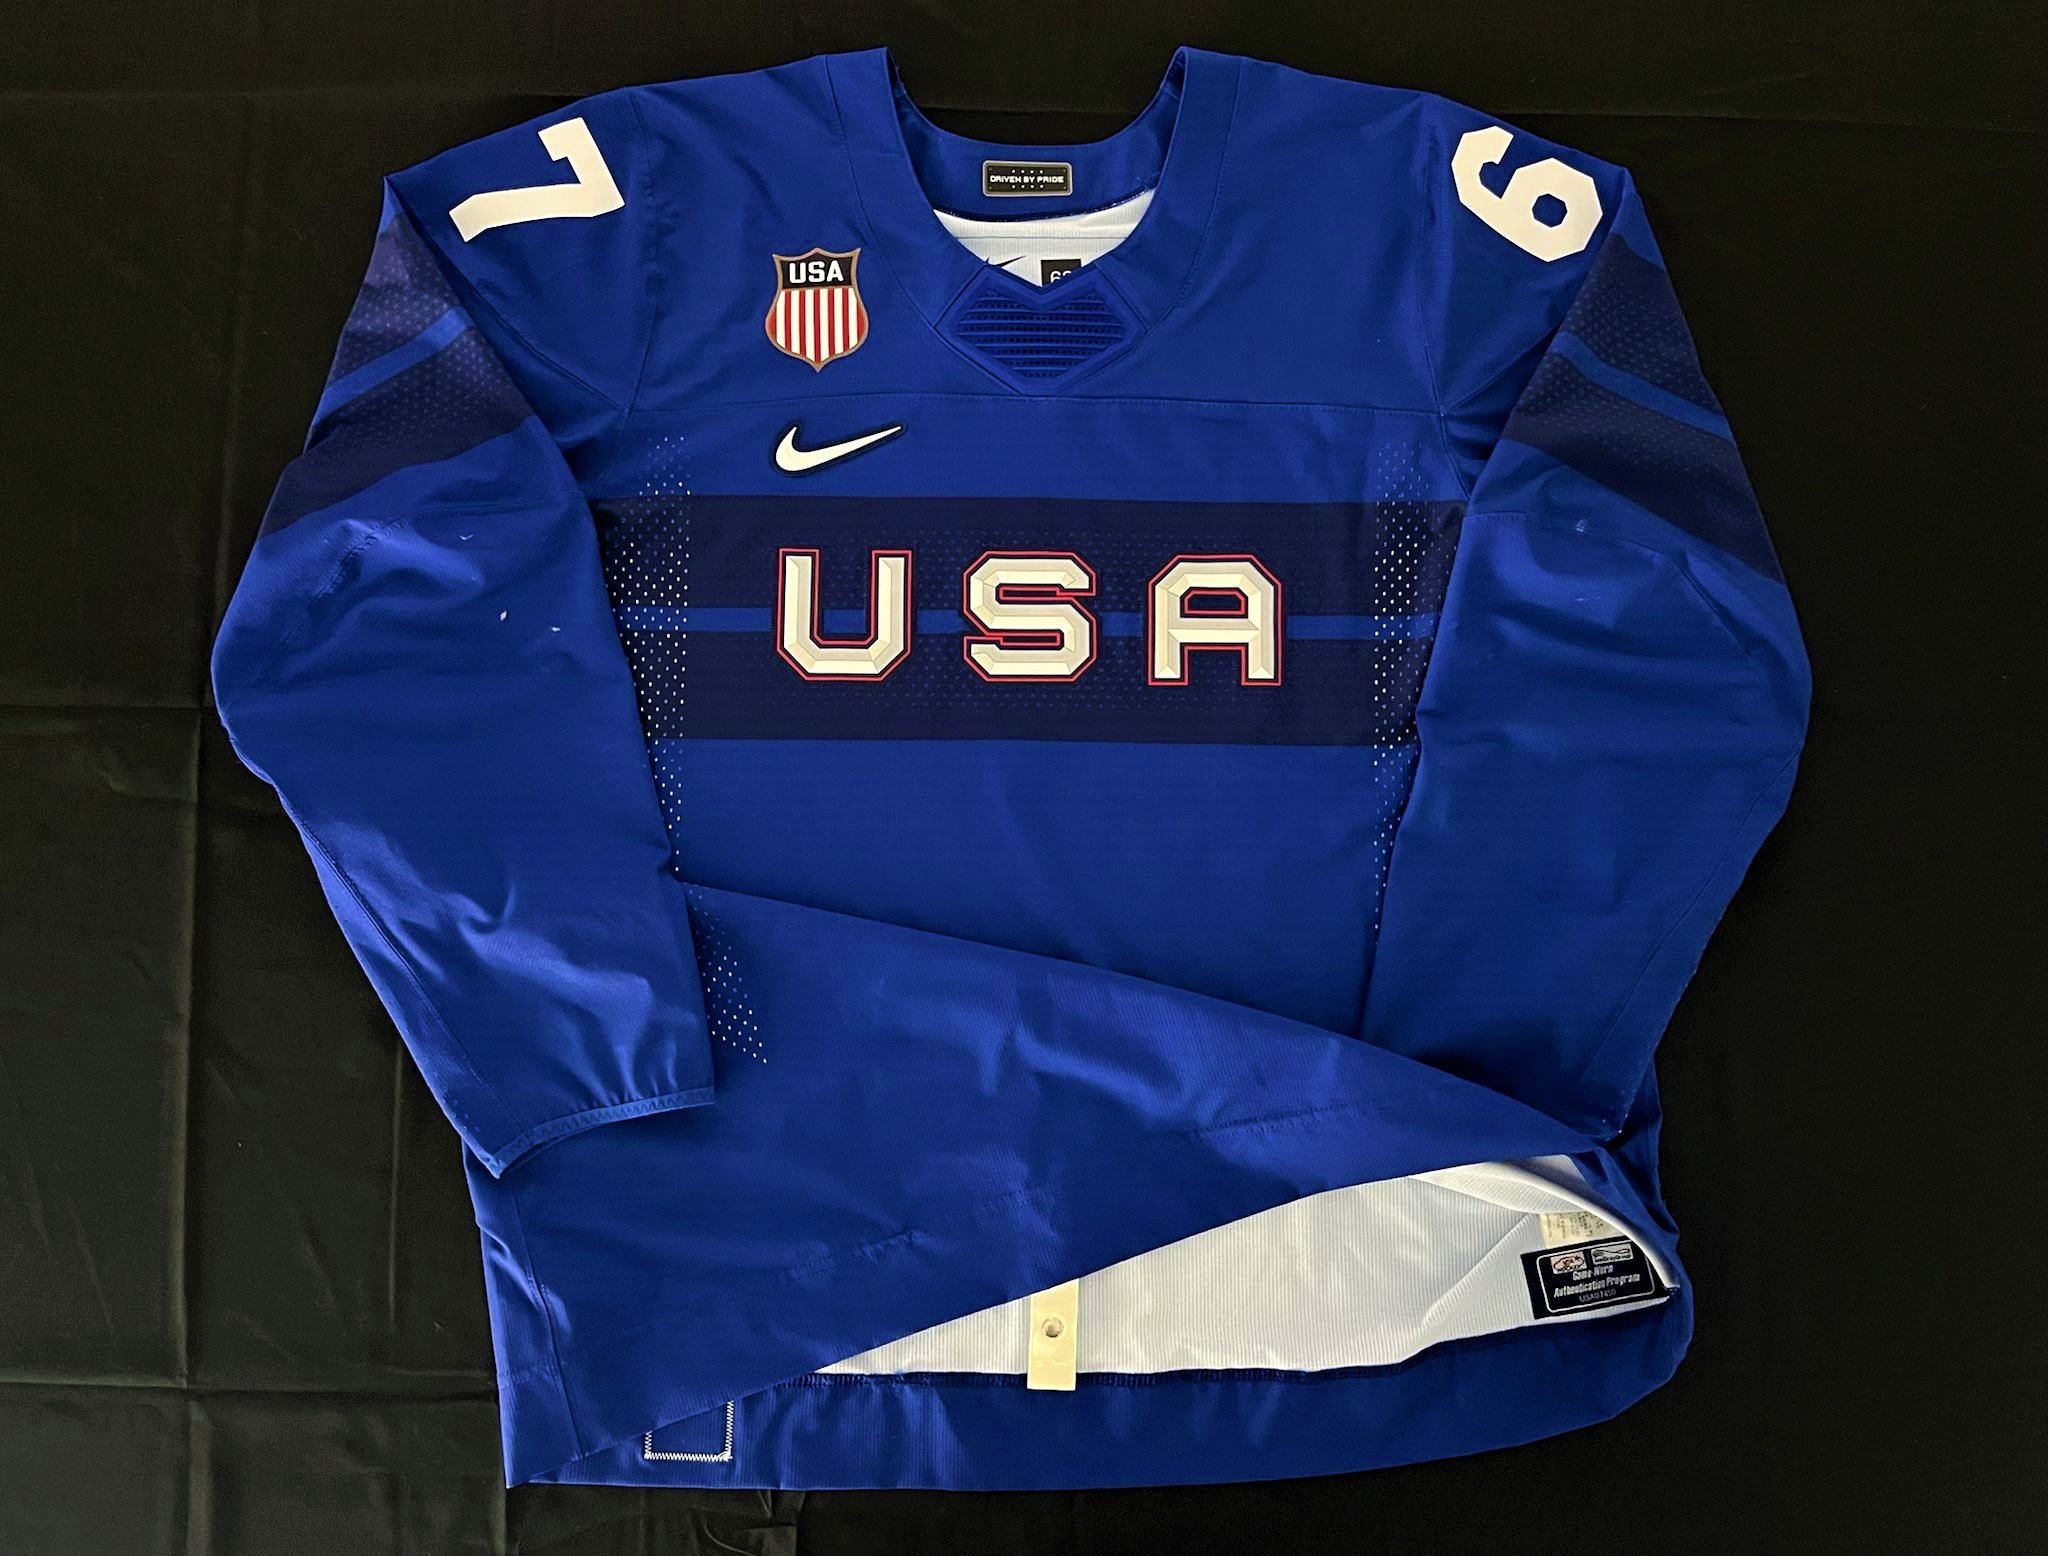 Matthew Knies Toronto Maple Leafs Adidas Pro Autographed Jersey